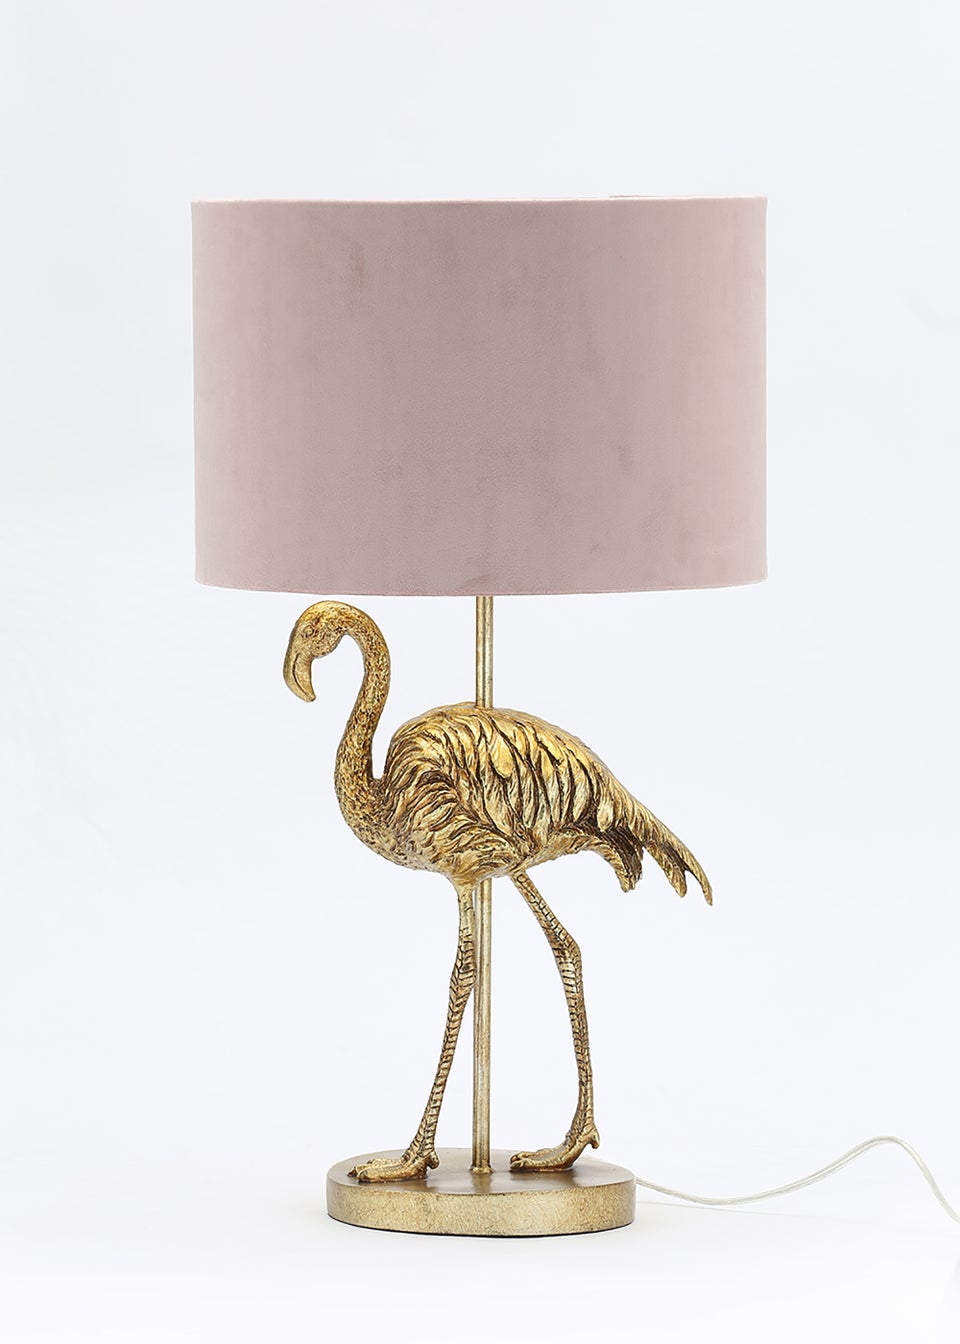 Inlight Gold Flamingo Table Lamp (56cm x 30cm x 30cm)